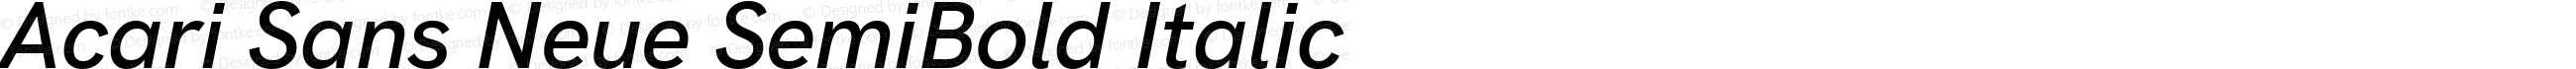 Acari Sans Neue SemiBold Italic